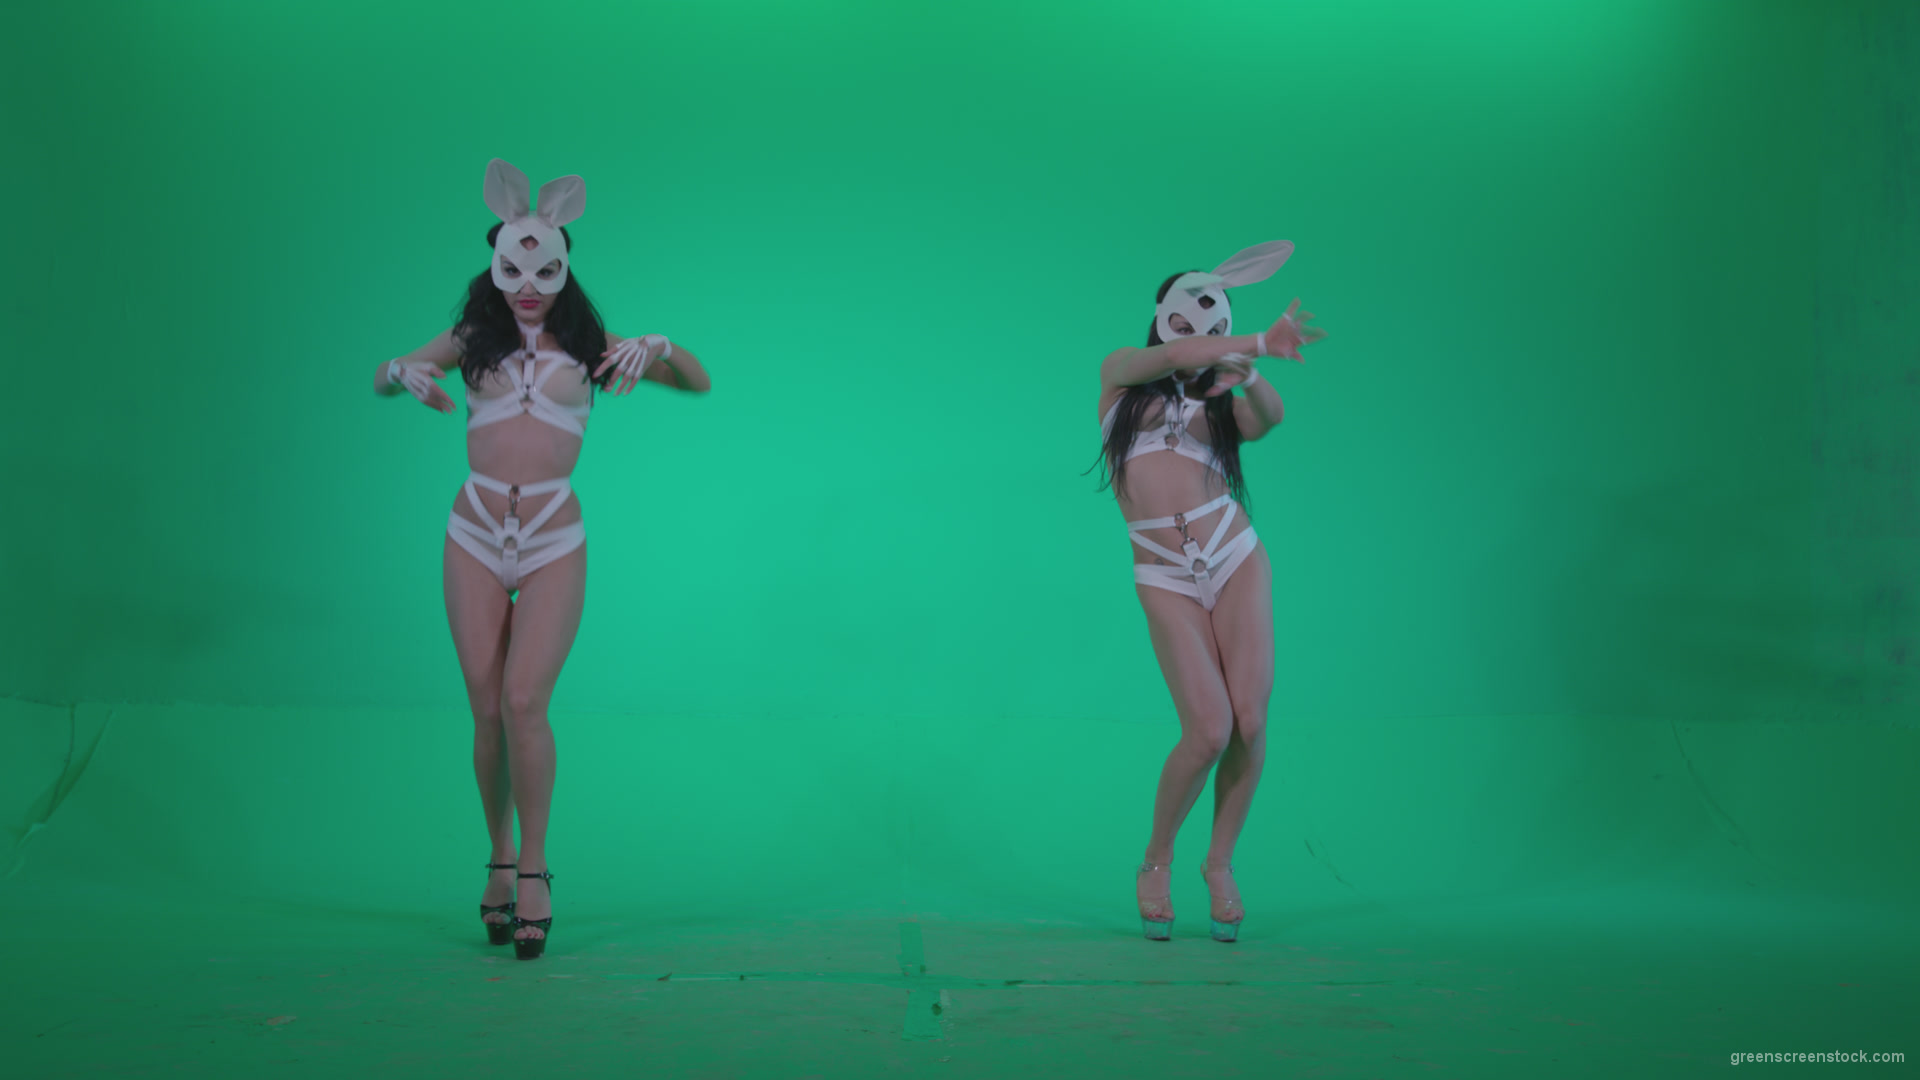 Go-go-Dancer-White-Rabbit-m1-Green-Screen-Video-Footage_001 Green Screen Stock